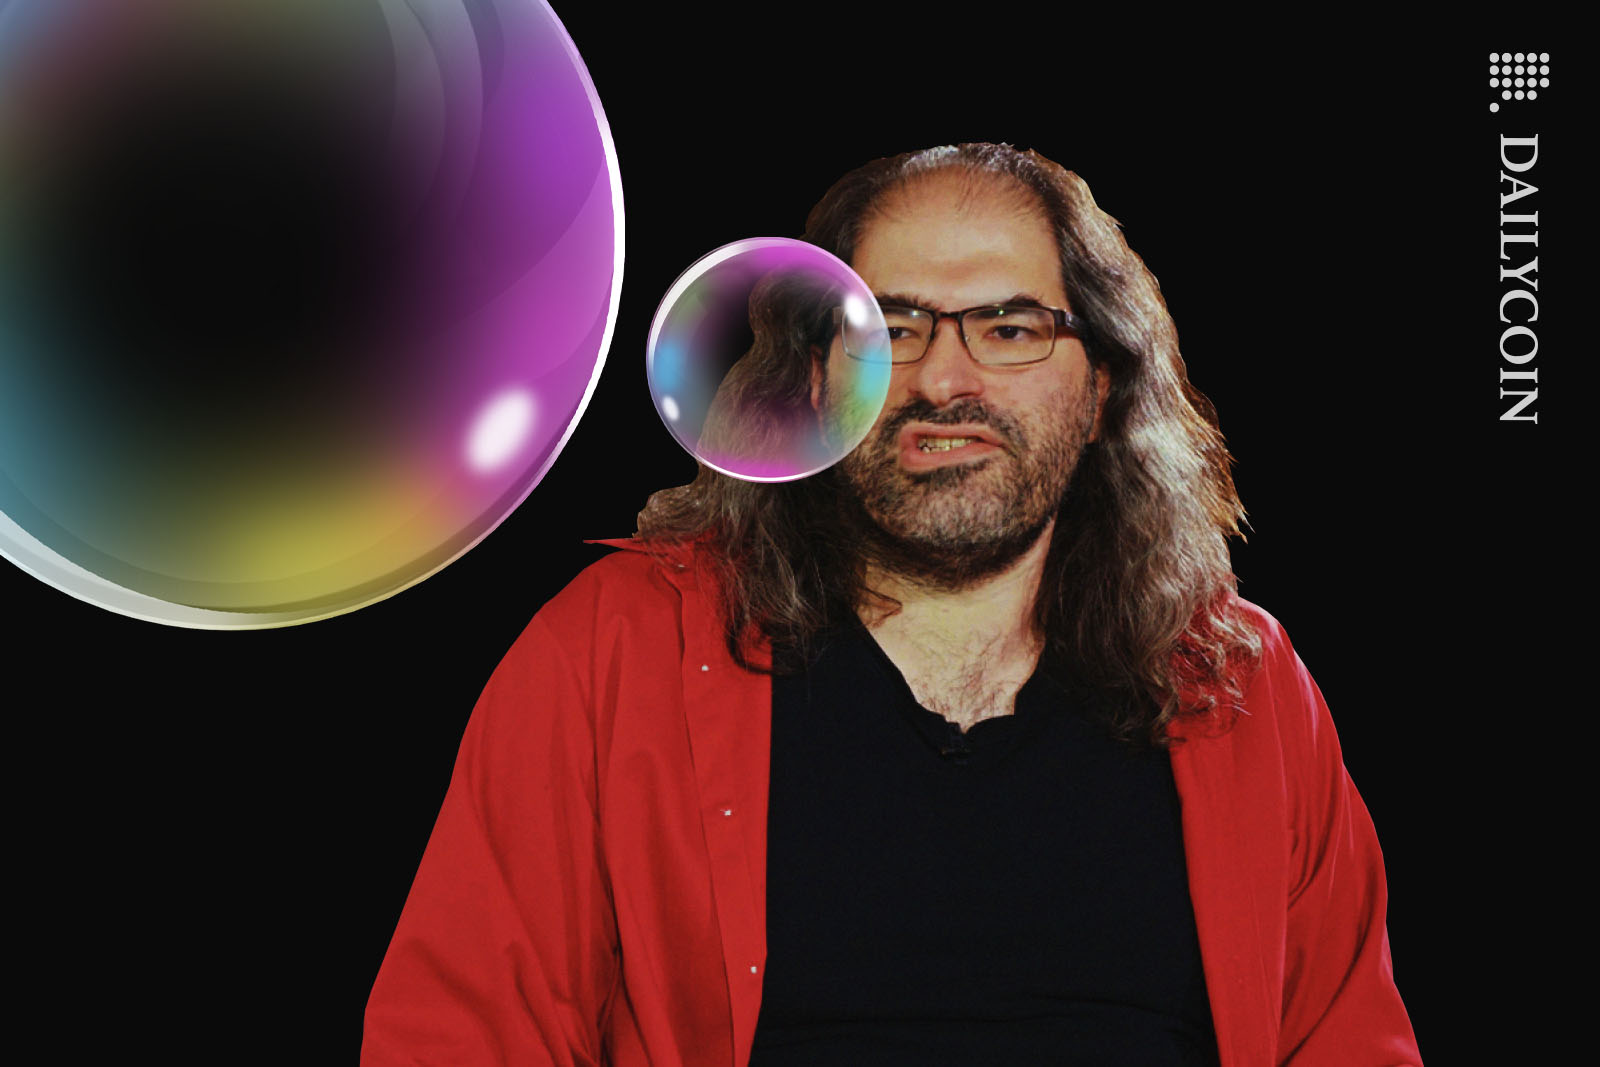 David Schwartz burping up two colourfull soap bubbles.